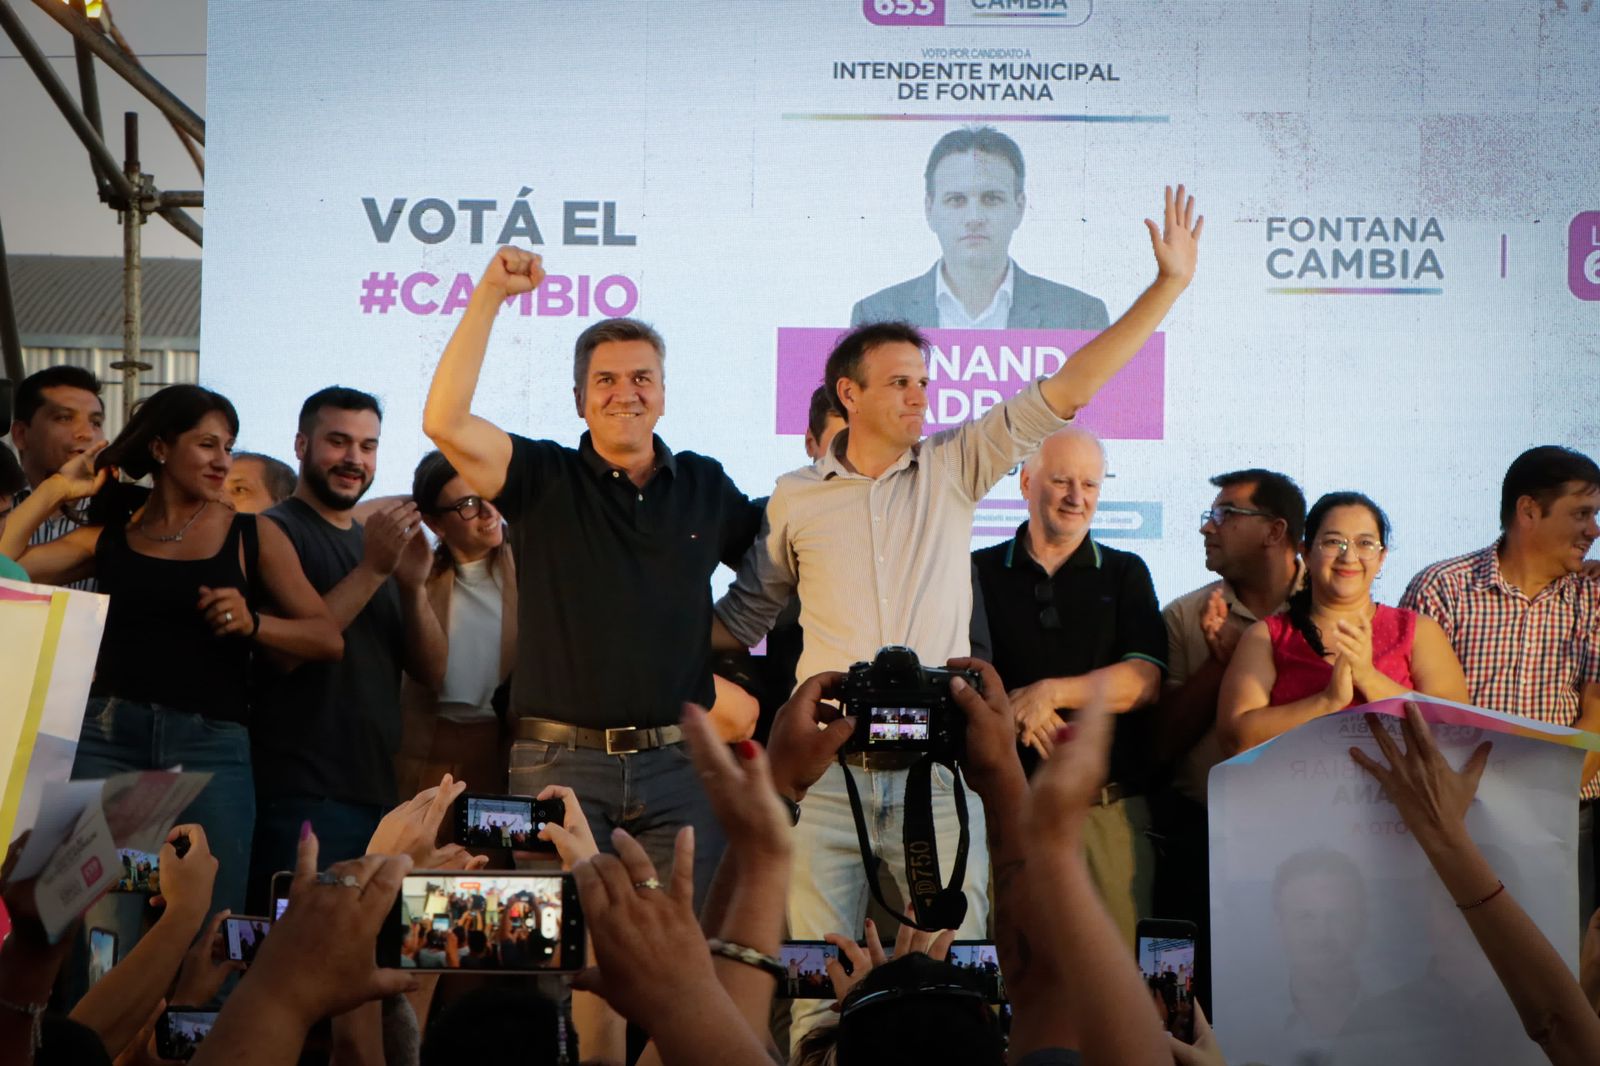 Fernando Cuadra, candidato a intendente de Fontana, lanzó su campaña con el apoyo del gobernador Zdero